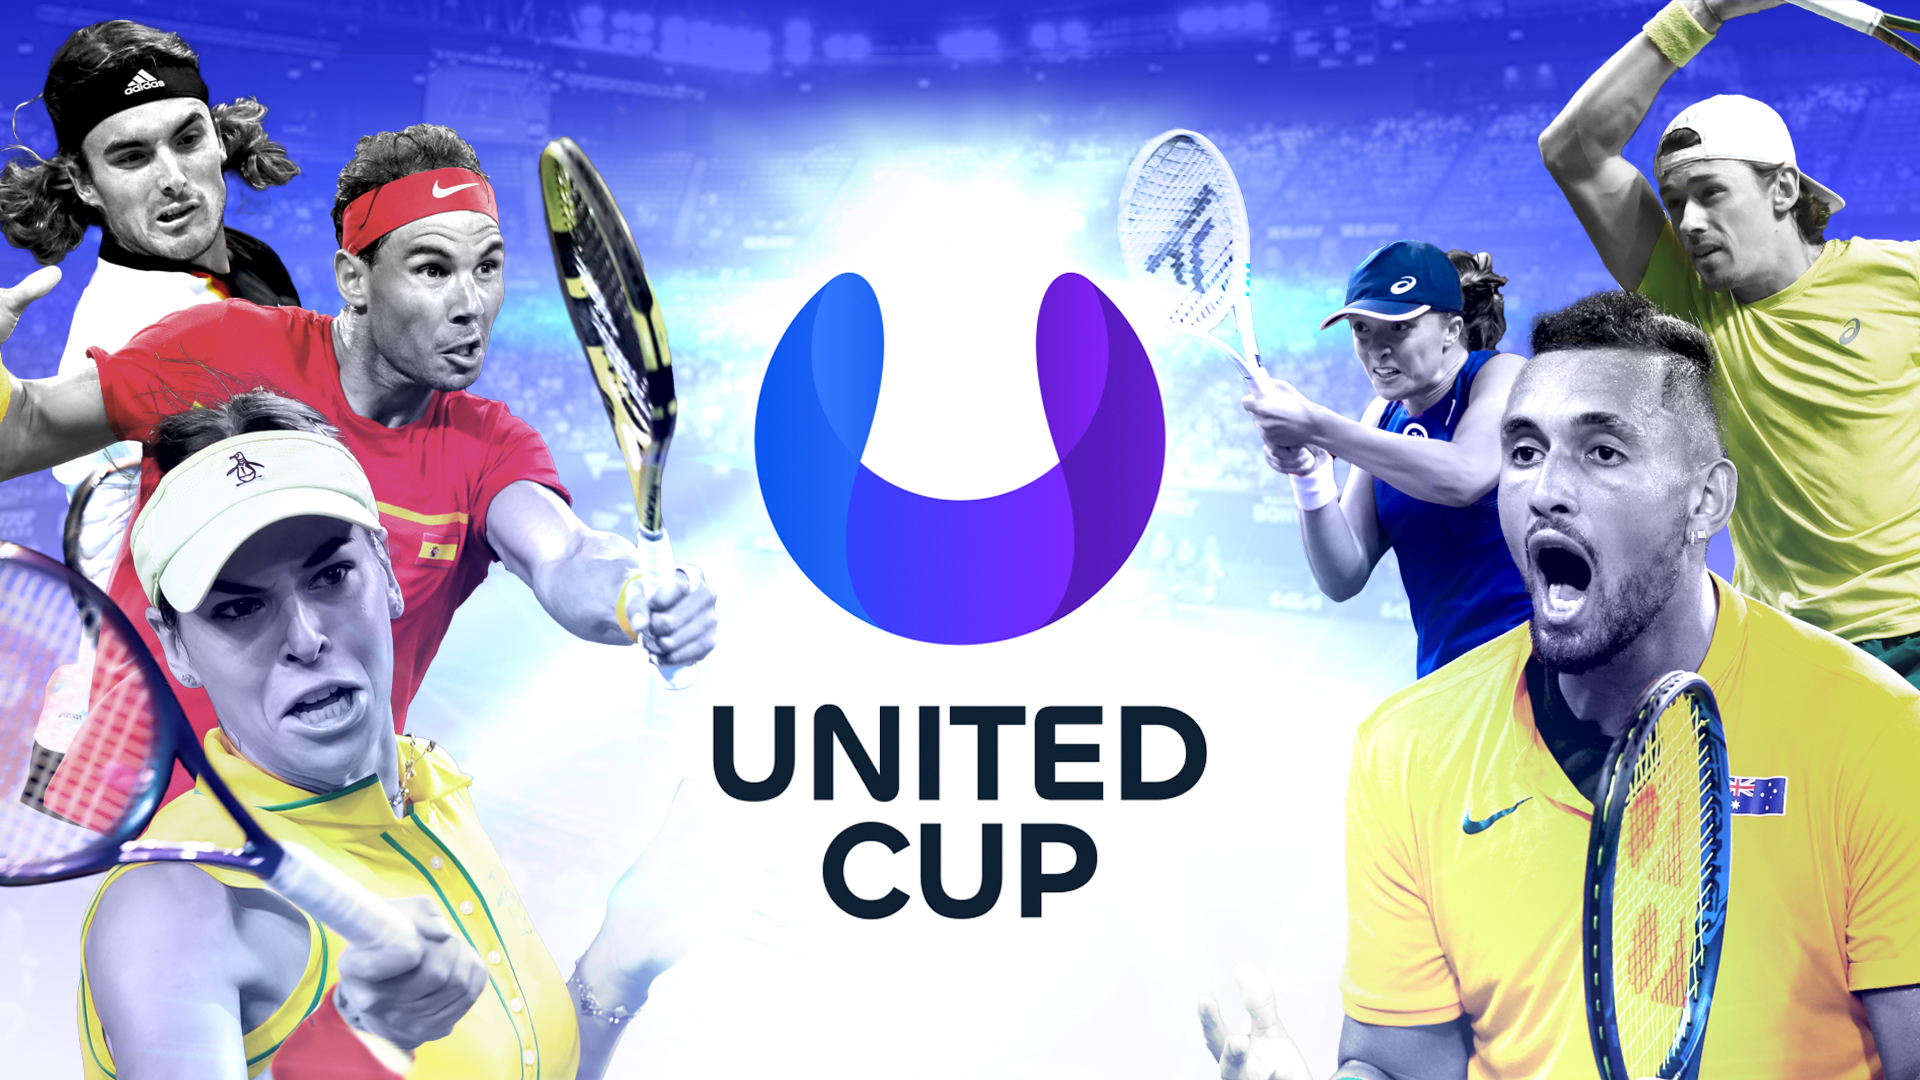 United Cup fires up summer of tennis on Nine Nine for Brands